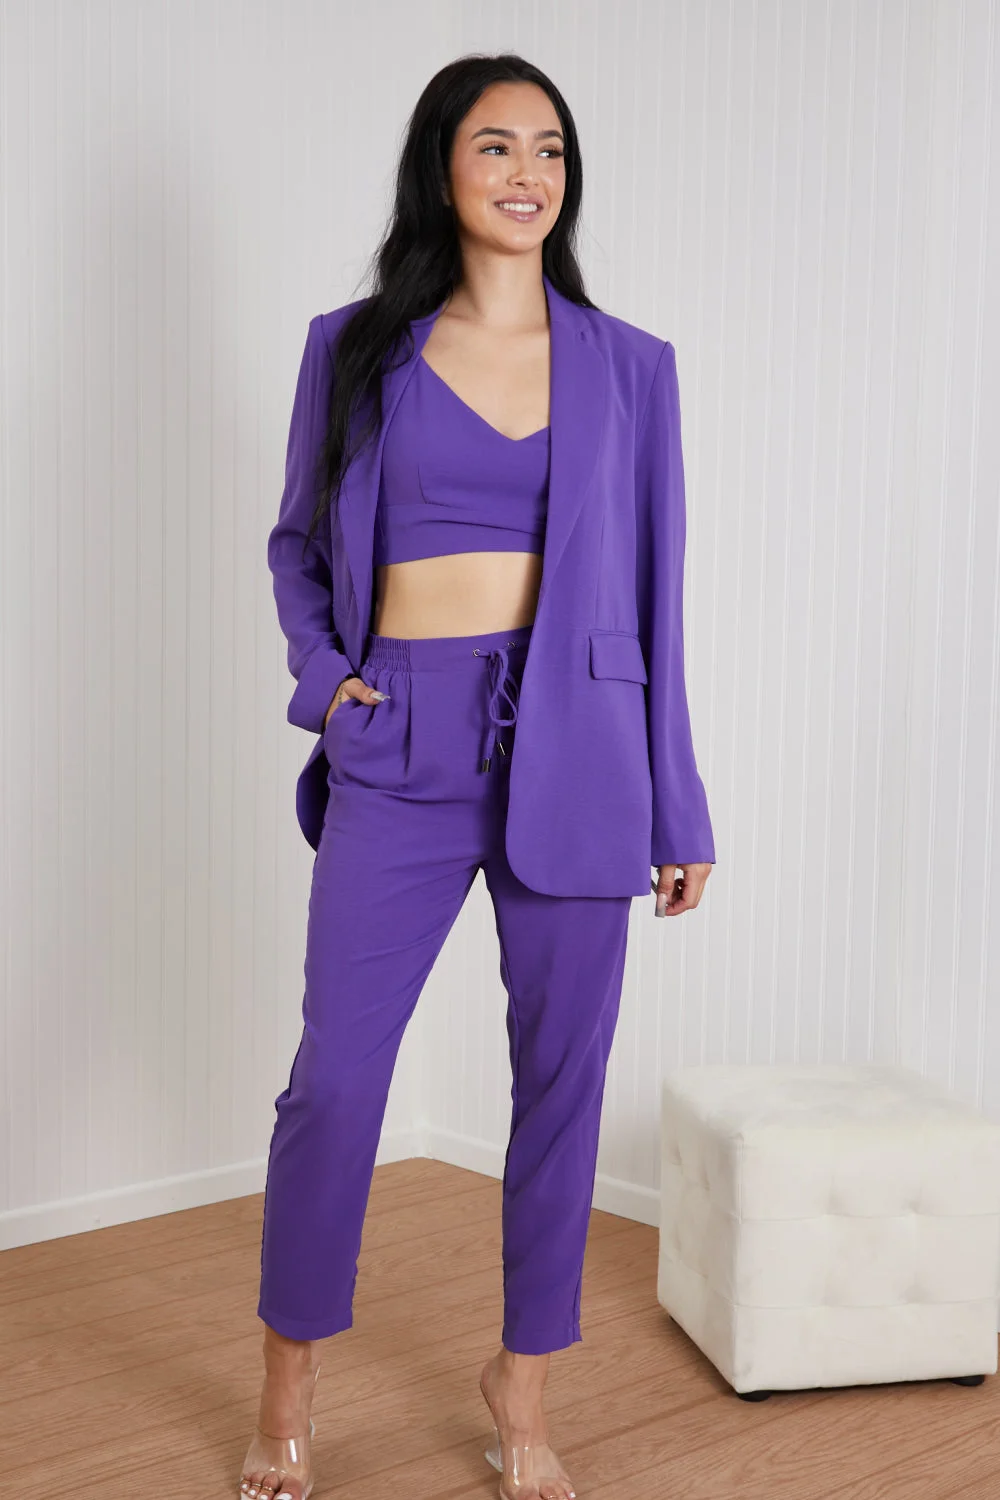 Uforever21 Geegee Wall Street Full Size Bra, Blazer, And Pants Set In Purple